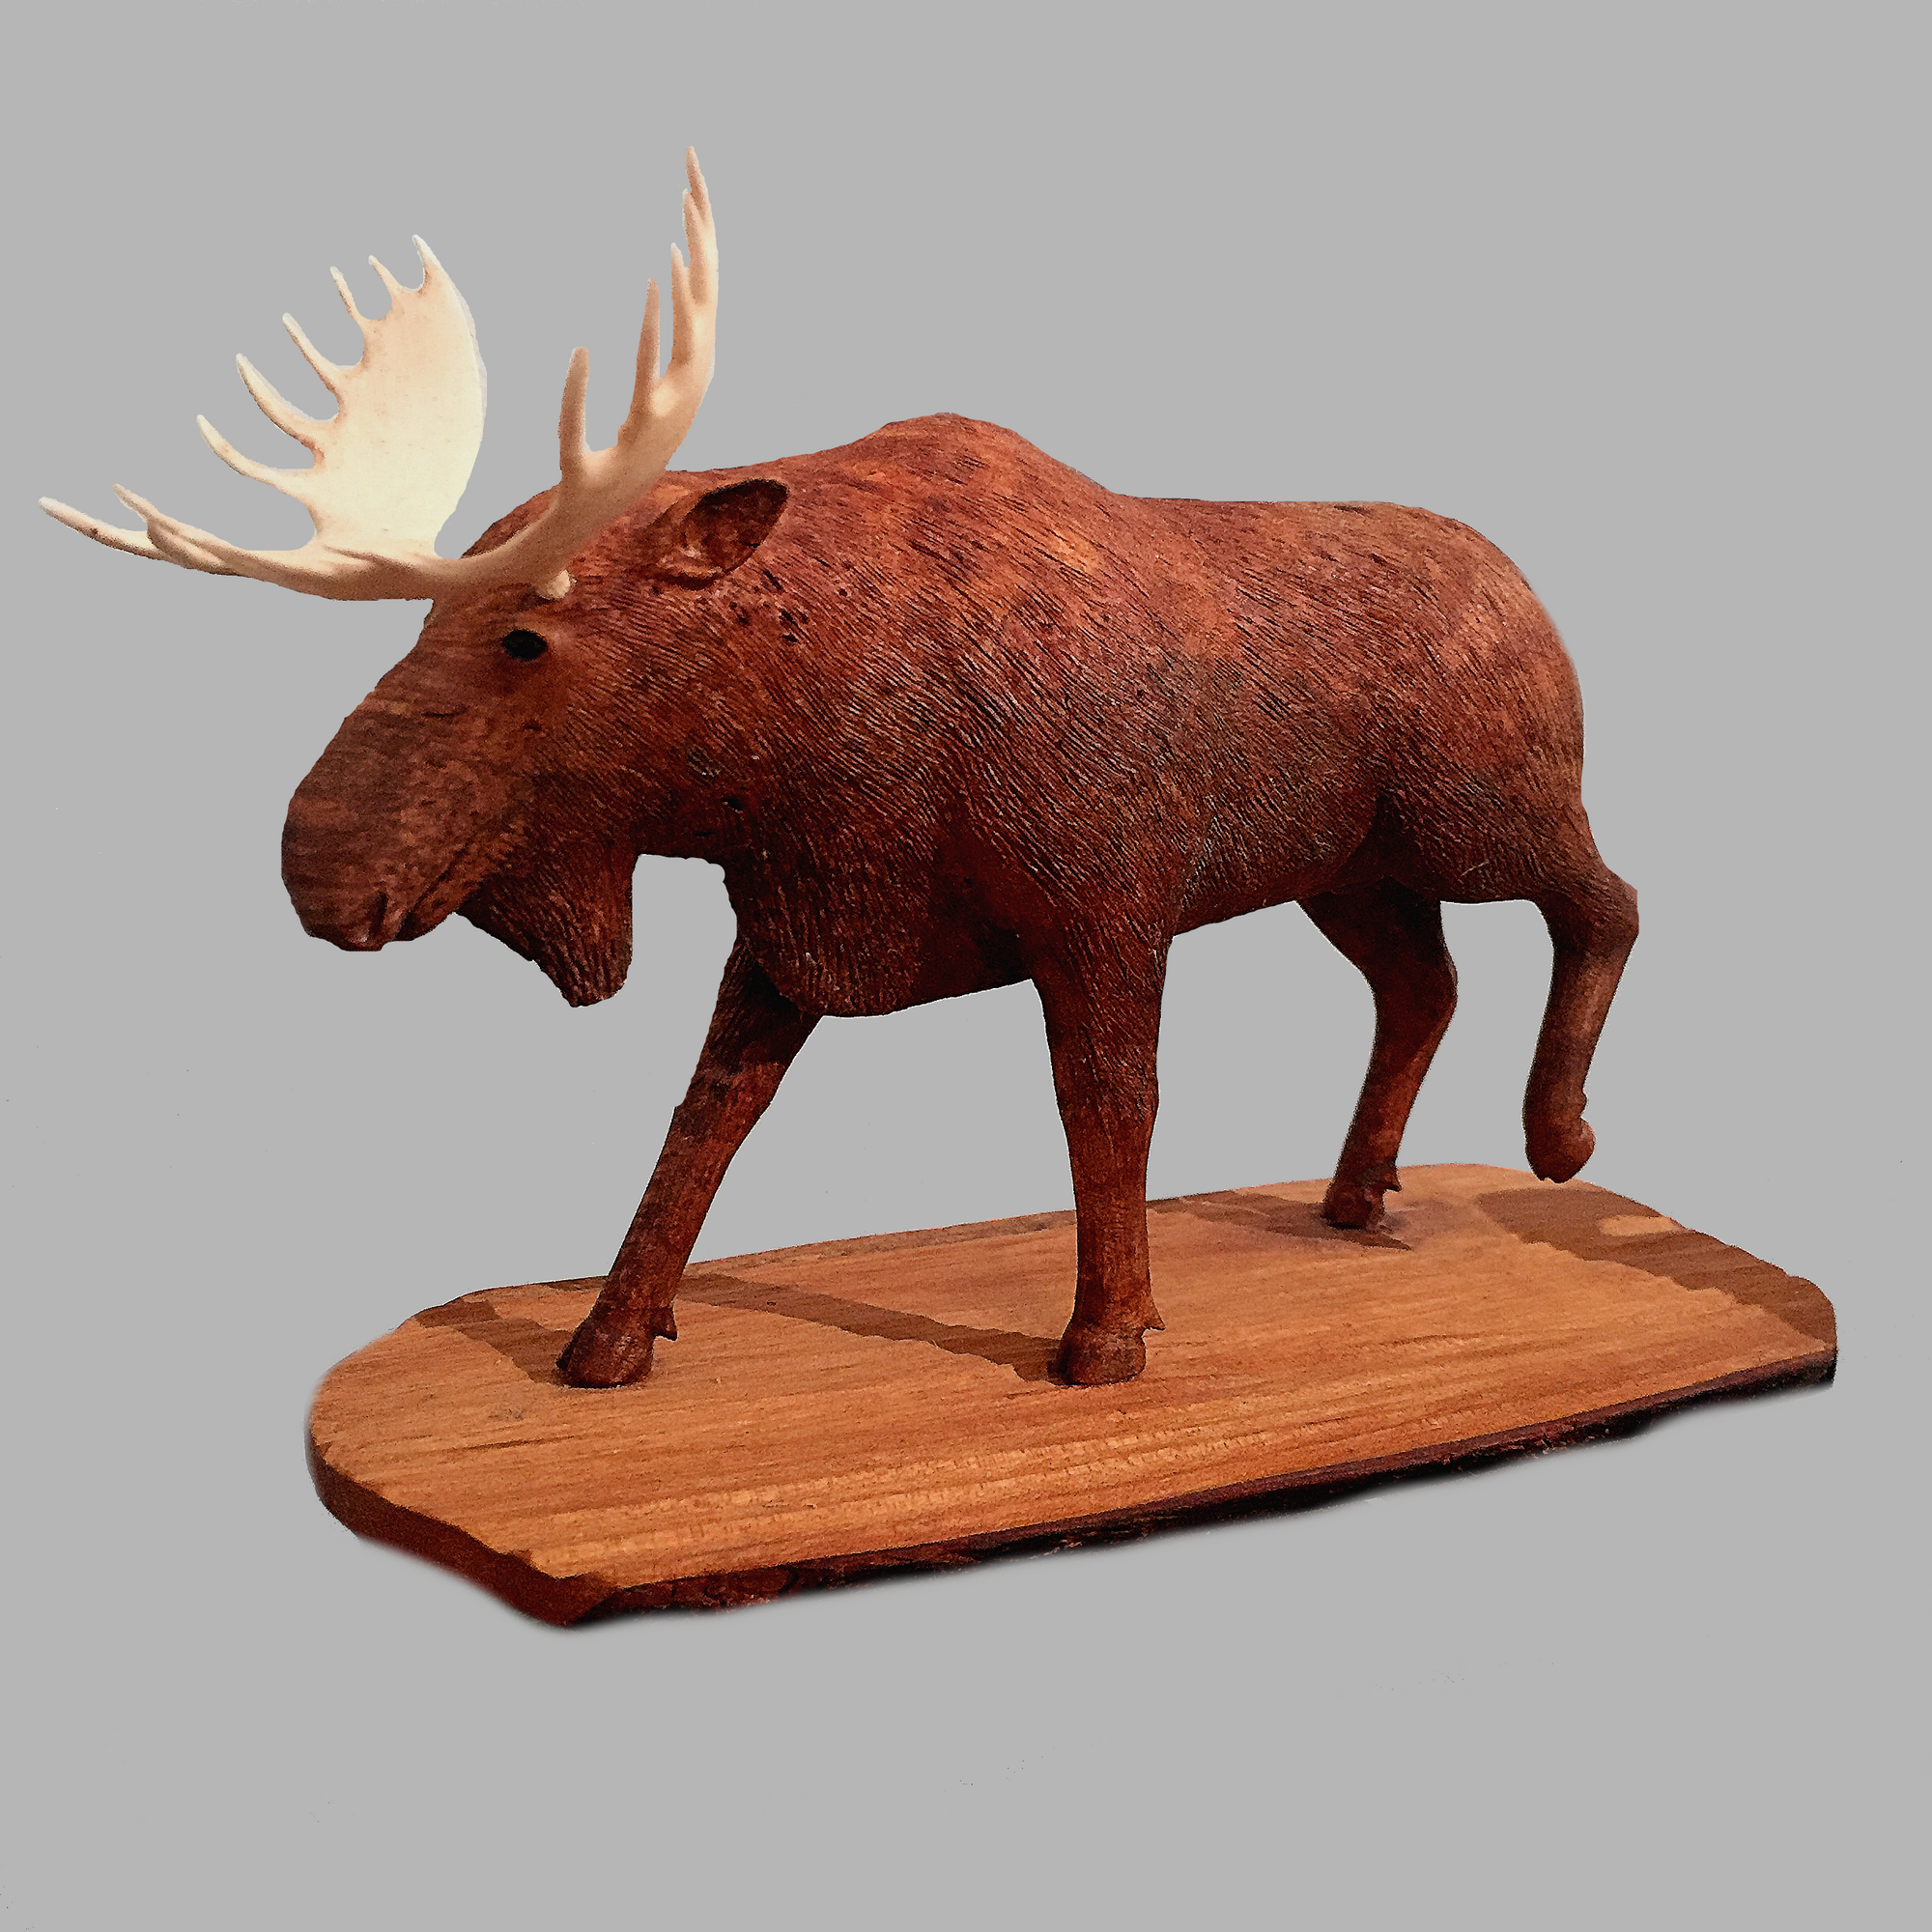 Moose Miniature Animal wood carving by Salt Spring Island artist Jim Dearing